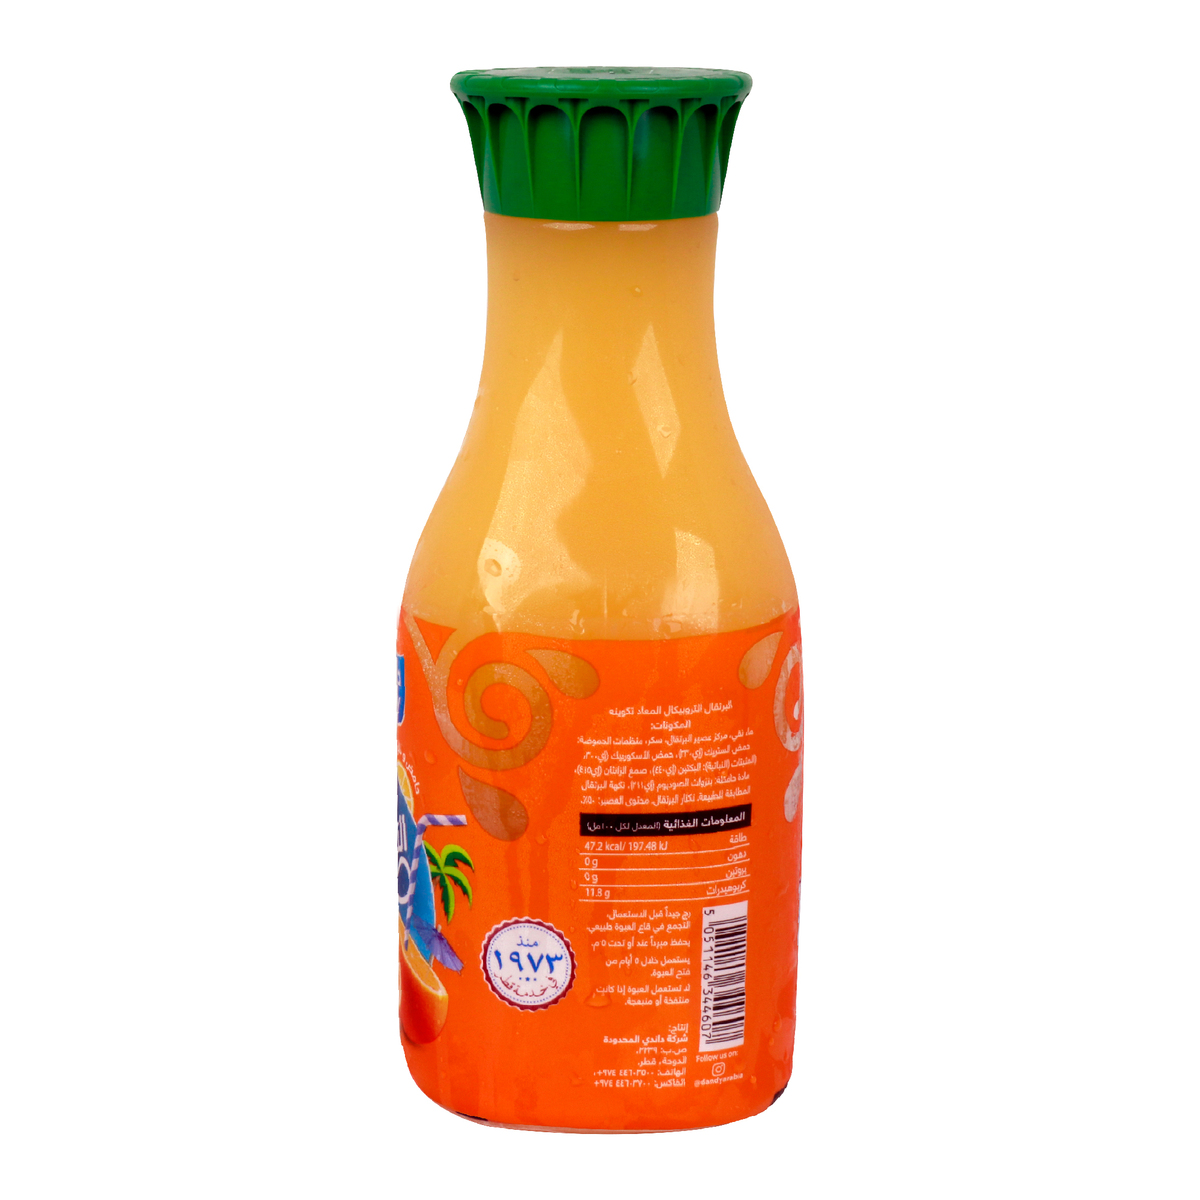 Dandy Tropical Orange 1.5Litre